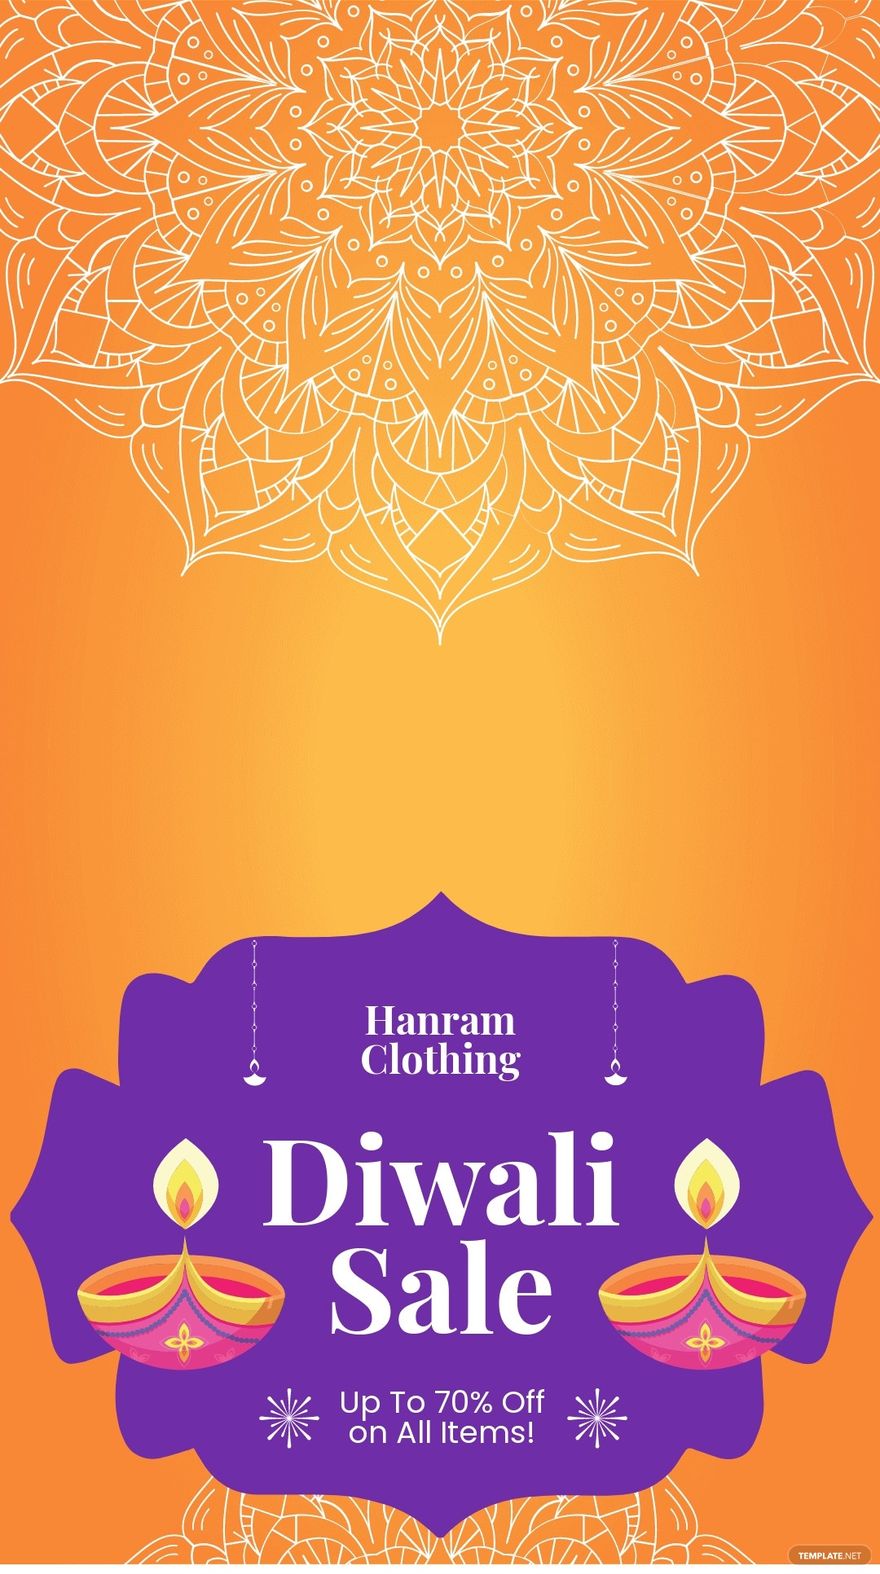 Diwali Sale Snapchat Geofilter